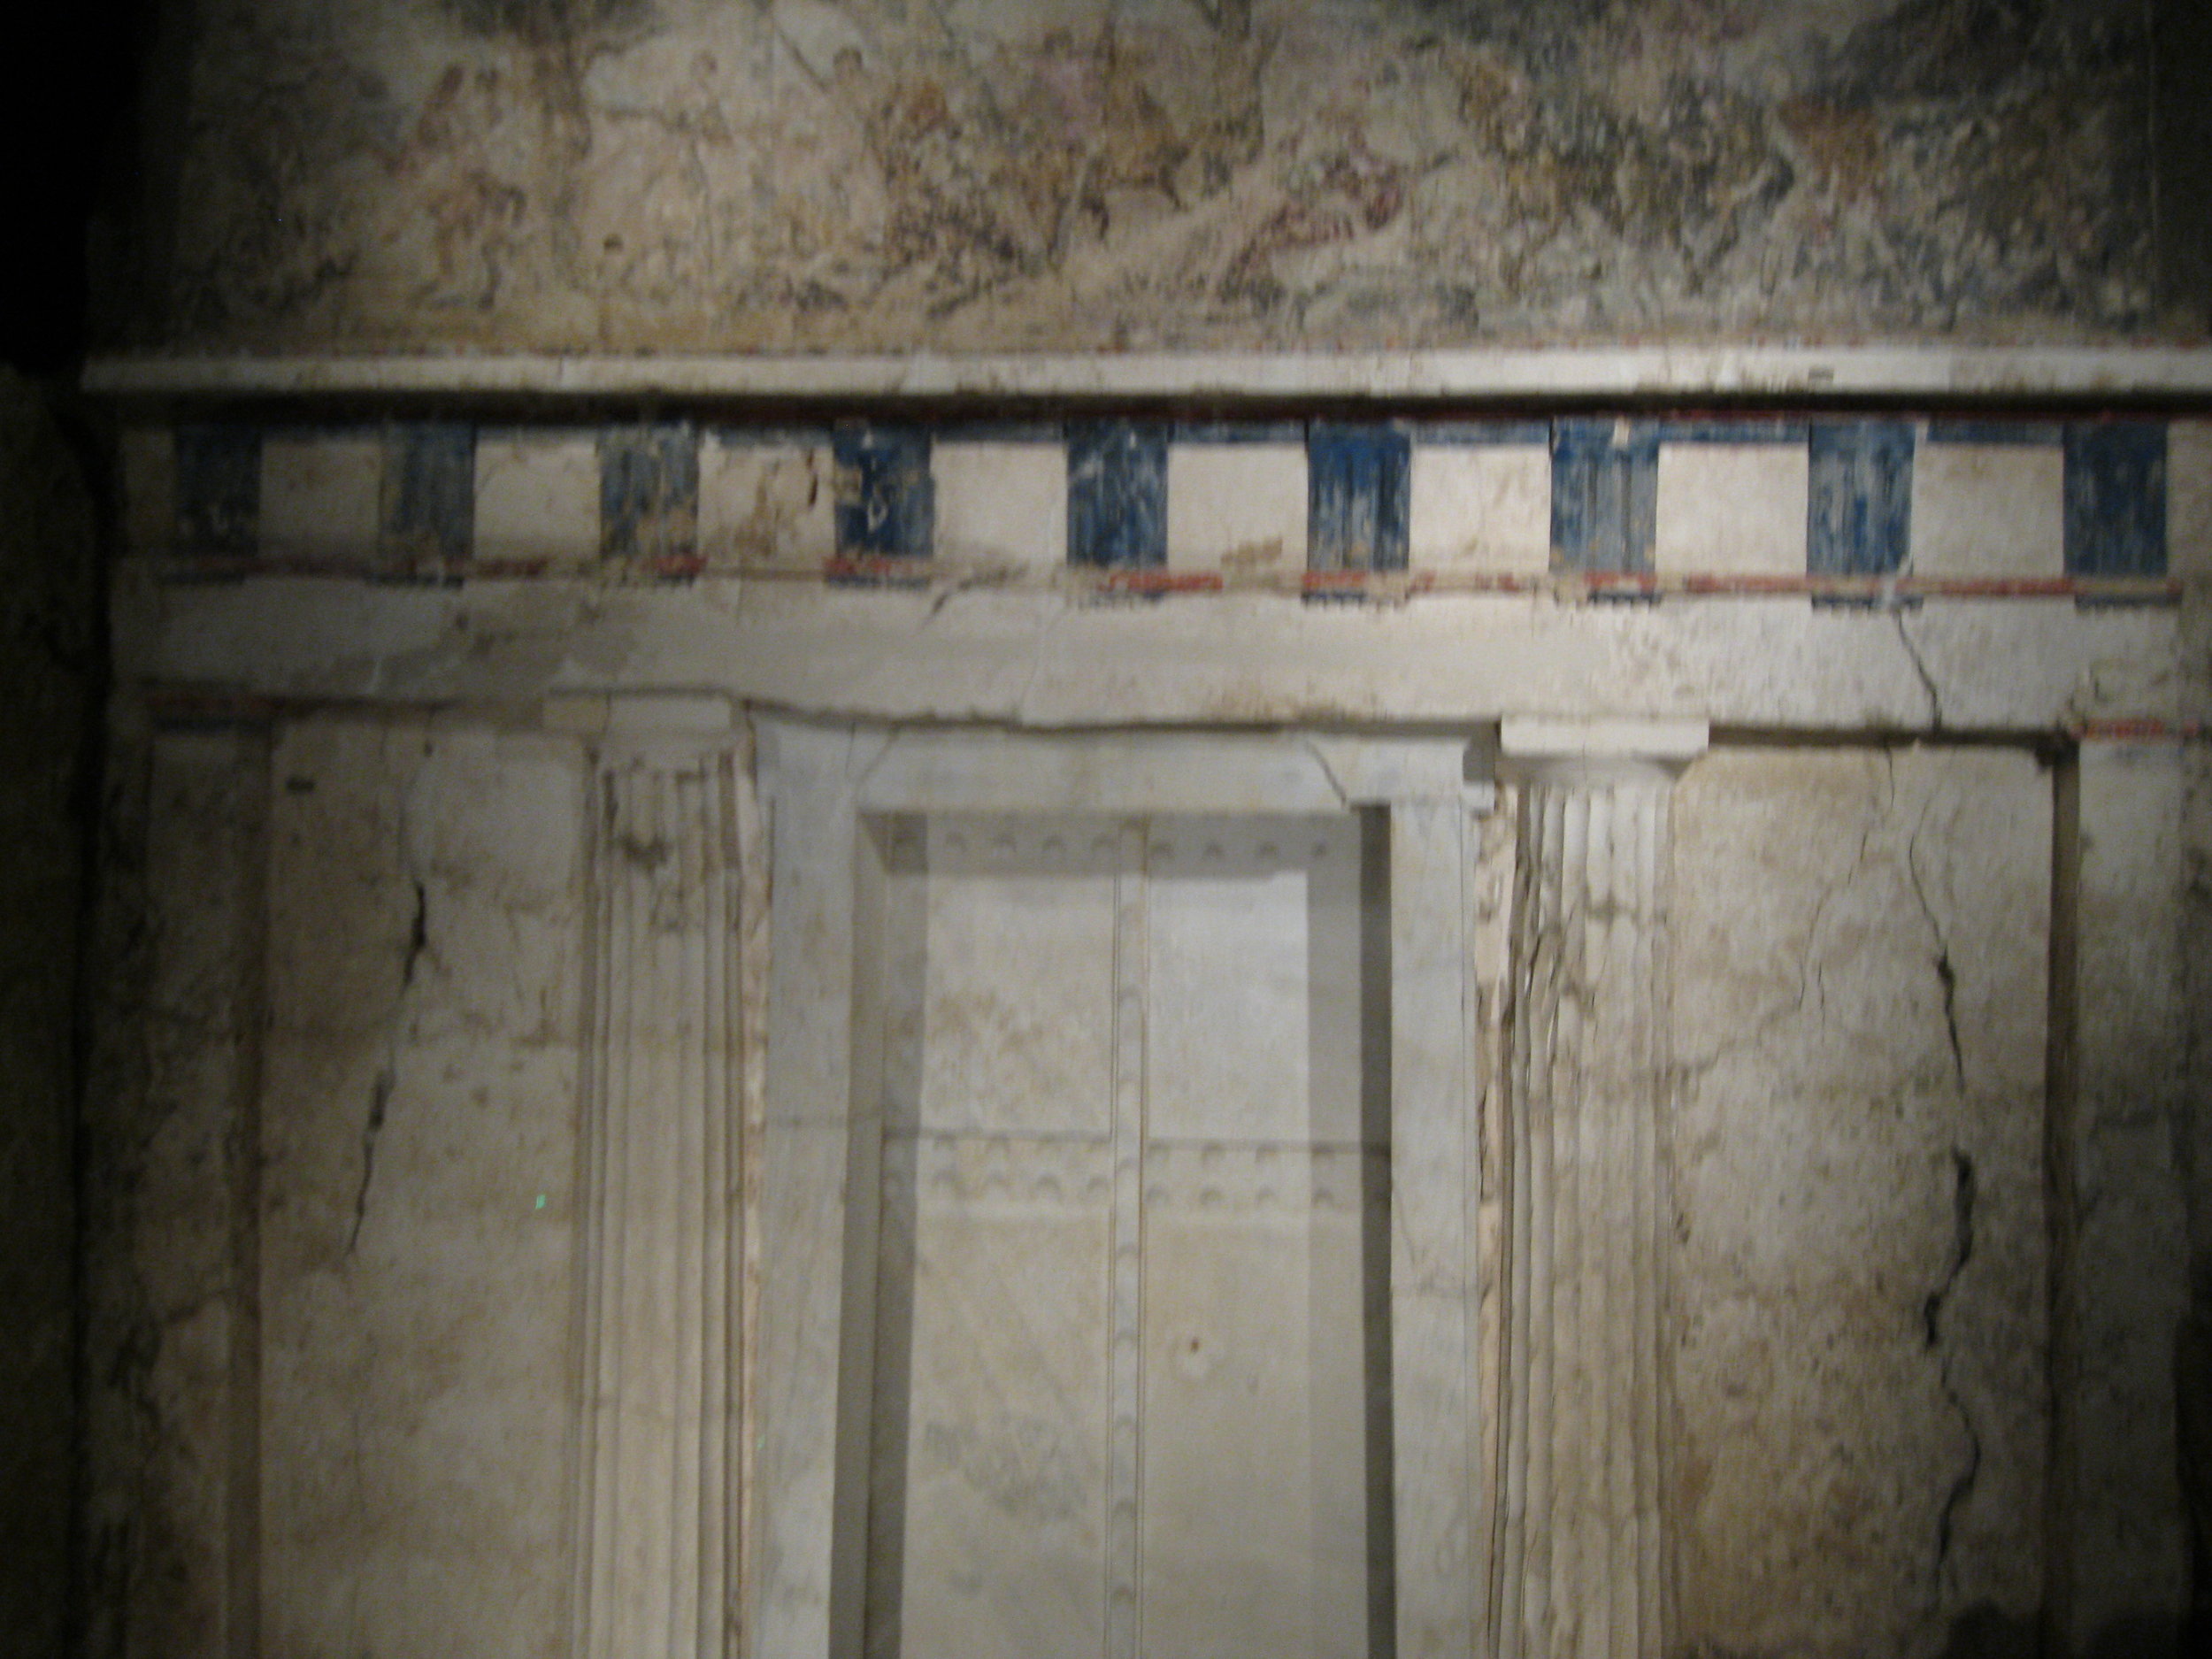 Entrance to Philip II’s tomb